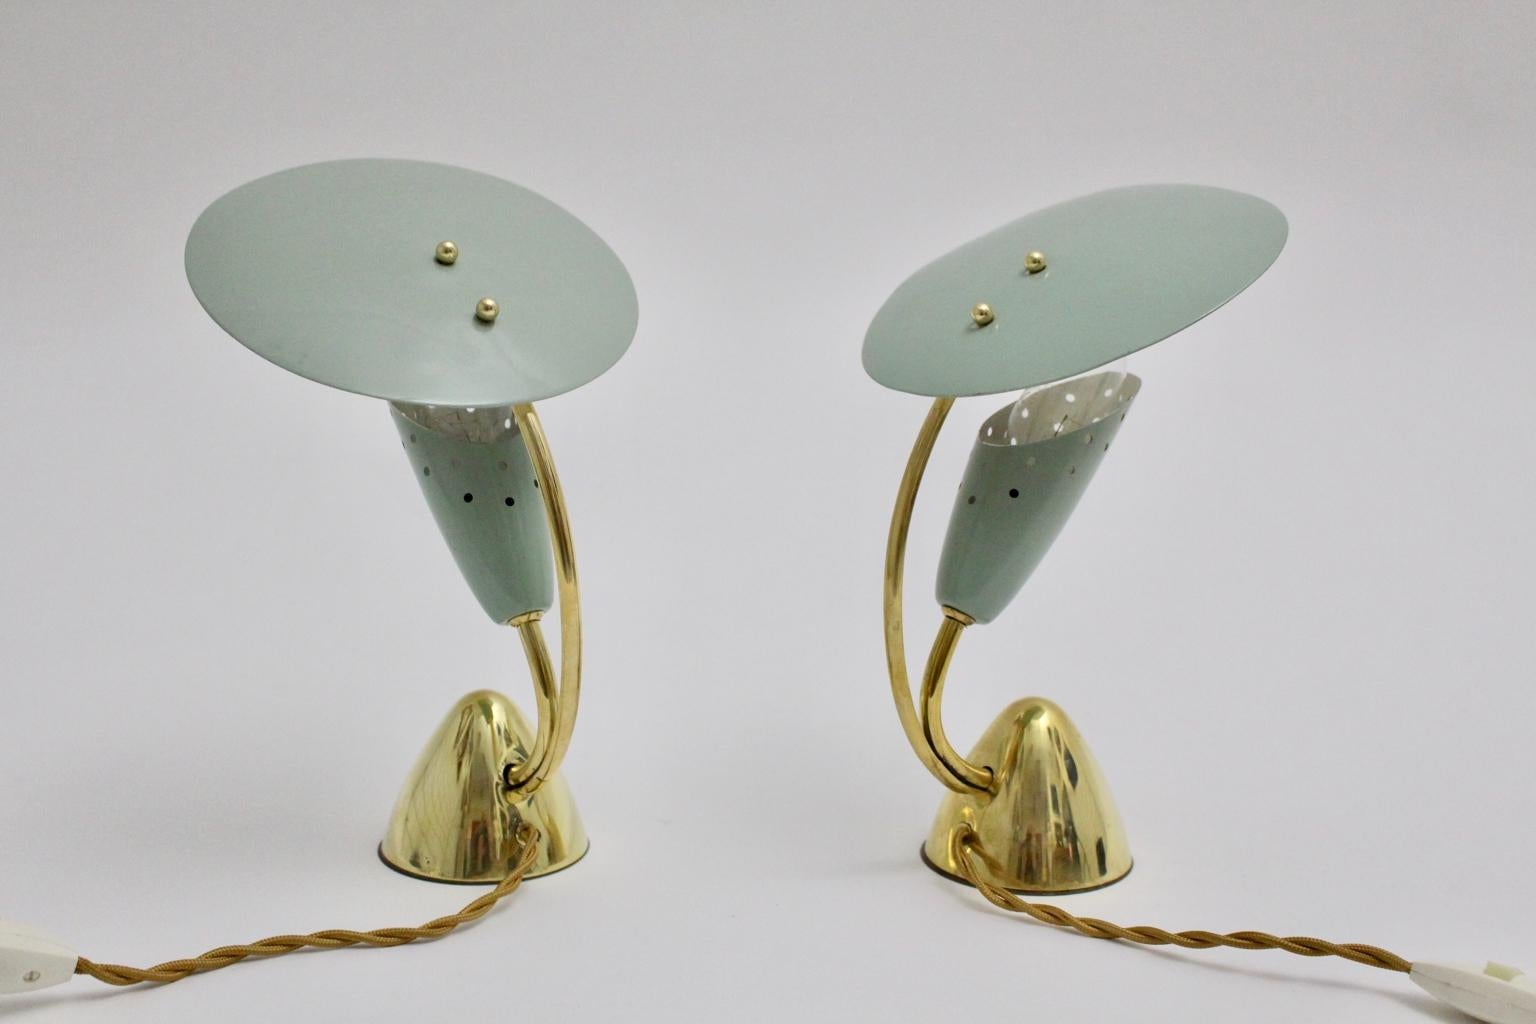 Italian Mid-Century Modern Green Metal Vintage Bedside Lamps by Arredoluce 1950s, Italy